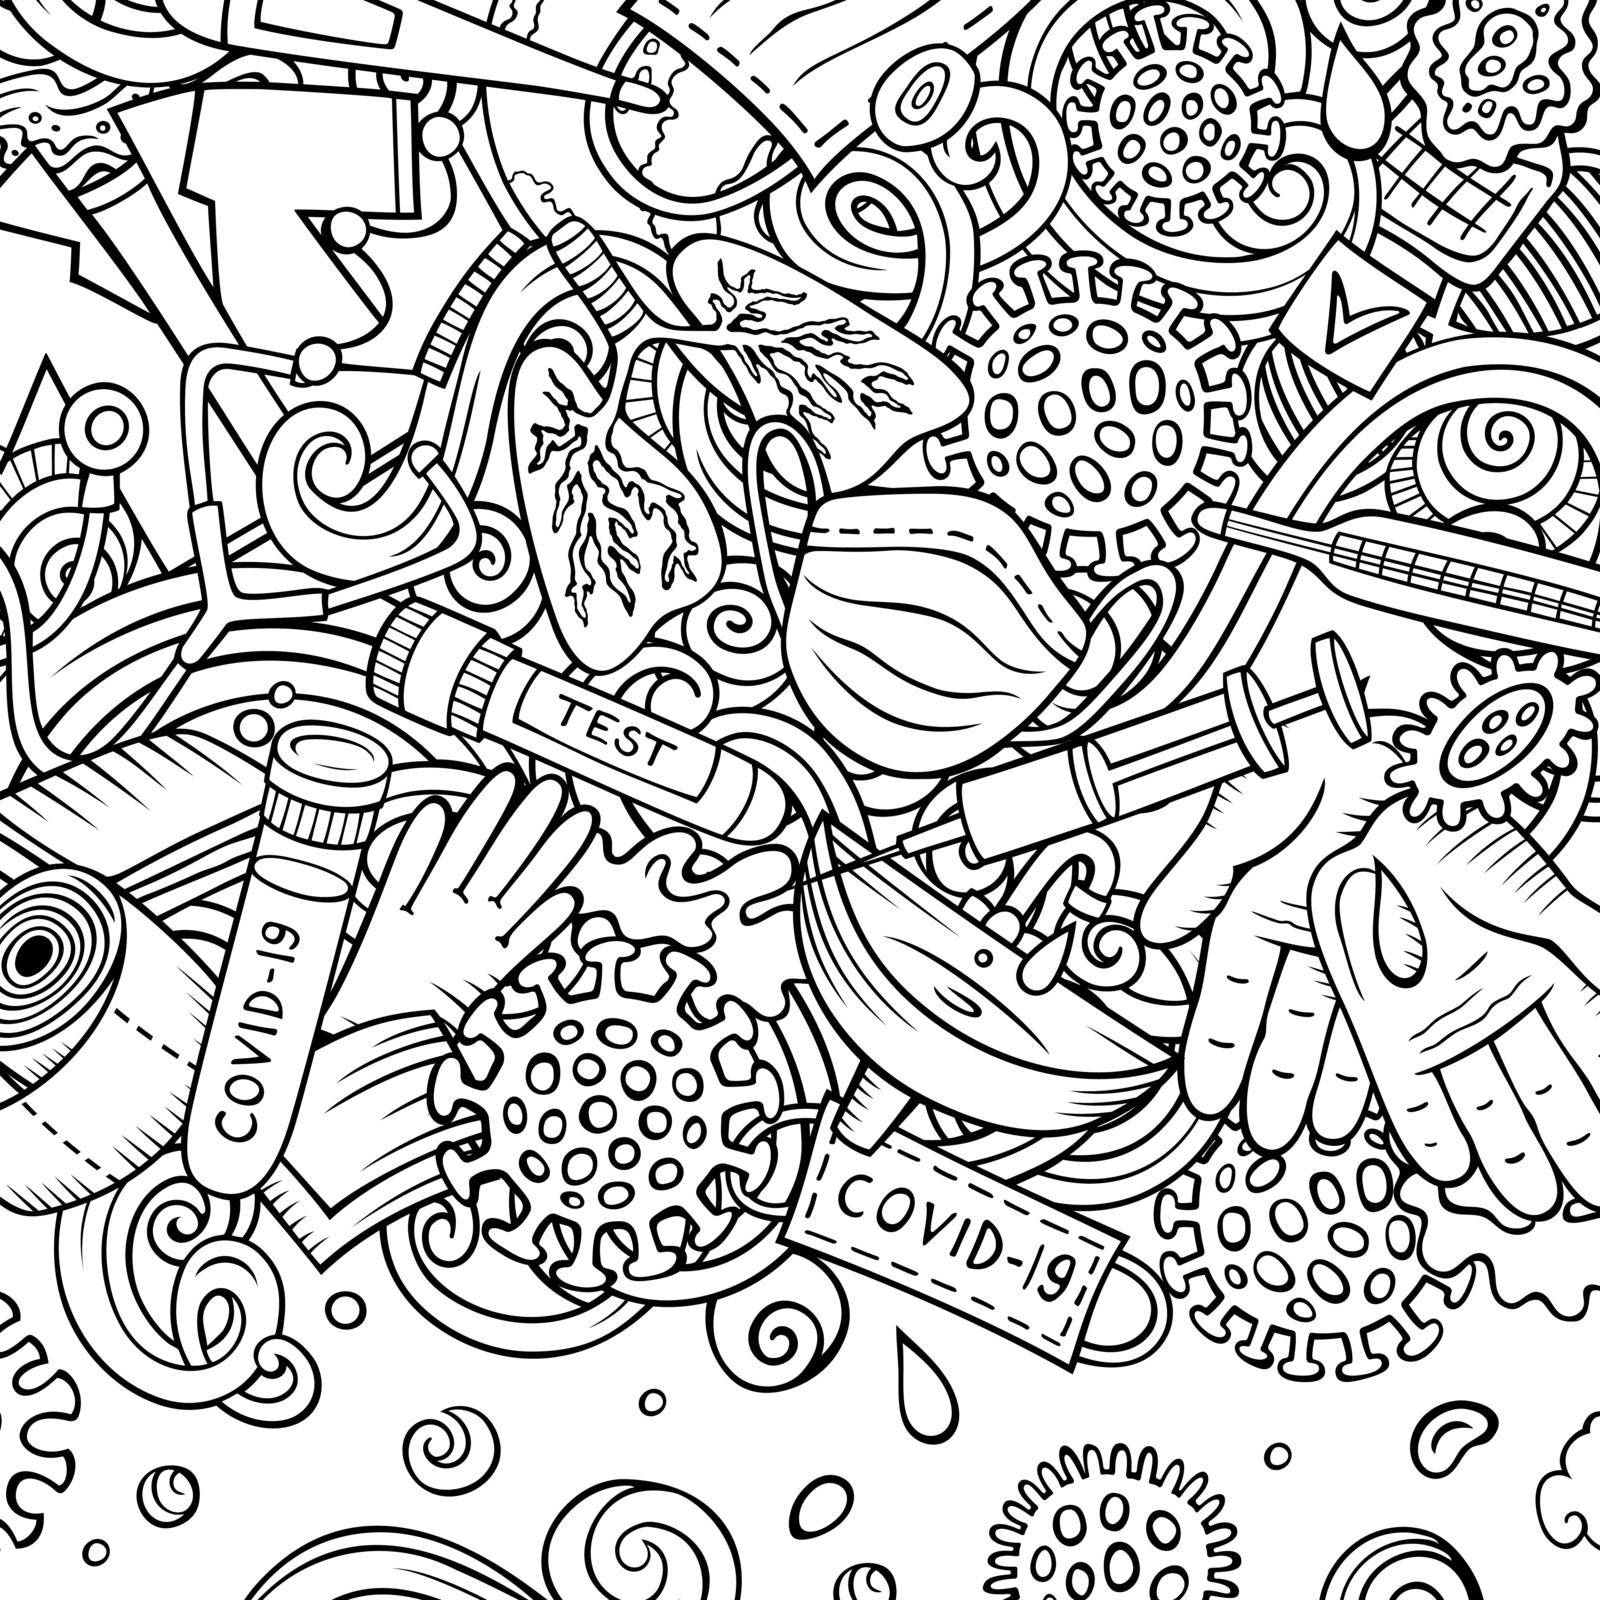 Coronavirus hand drawn vector doodles border by balabolka